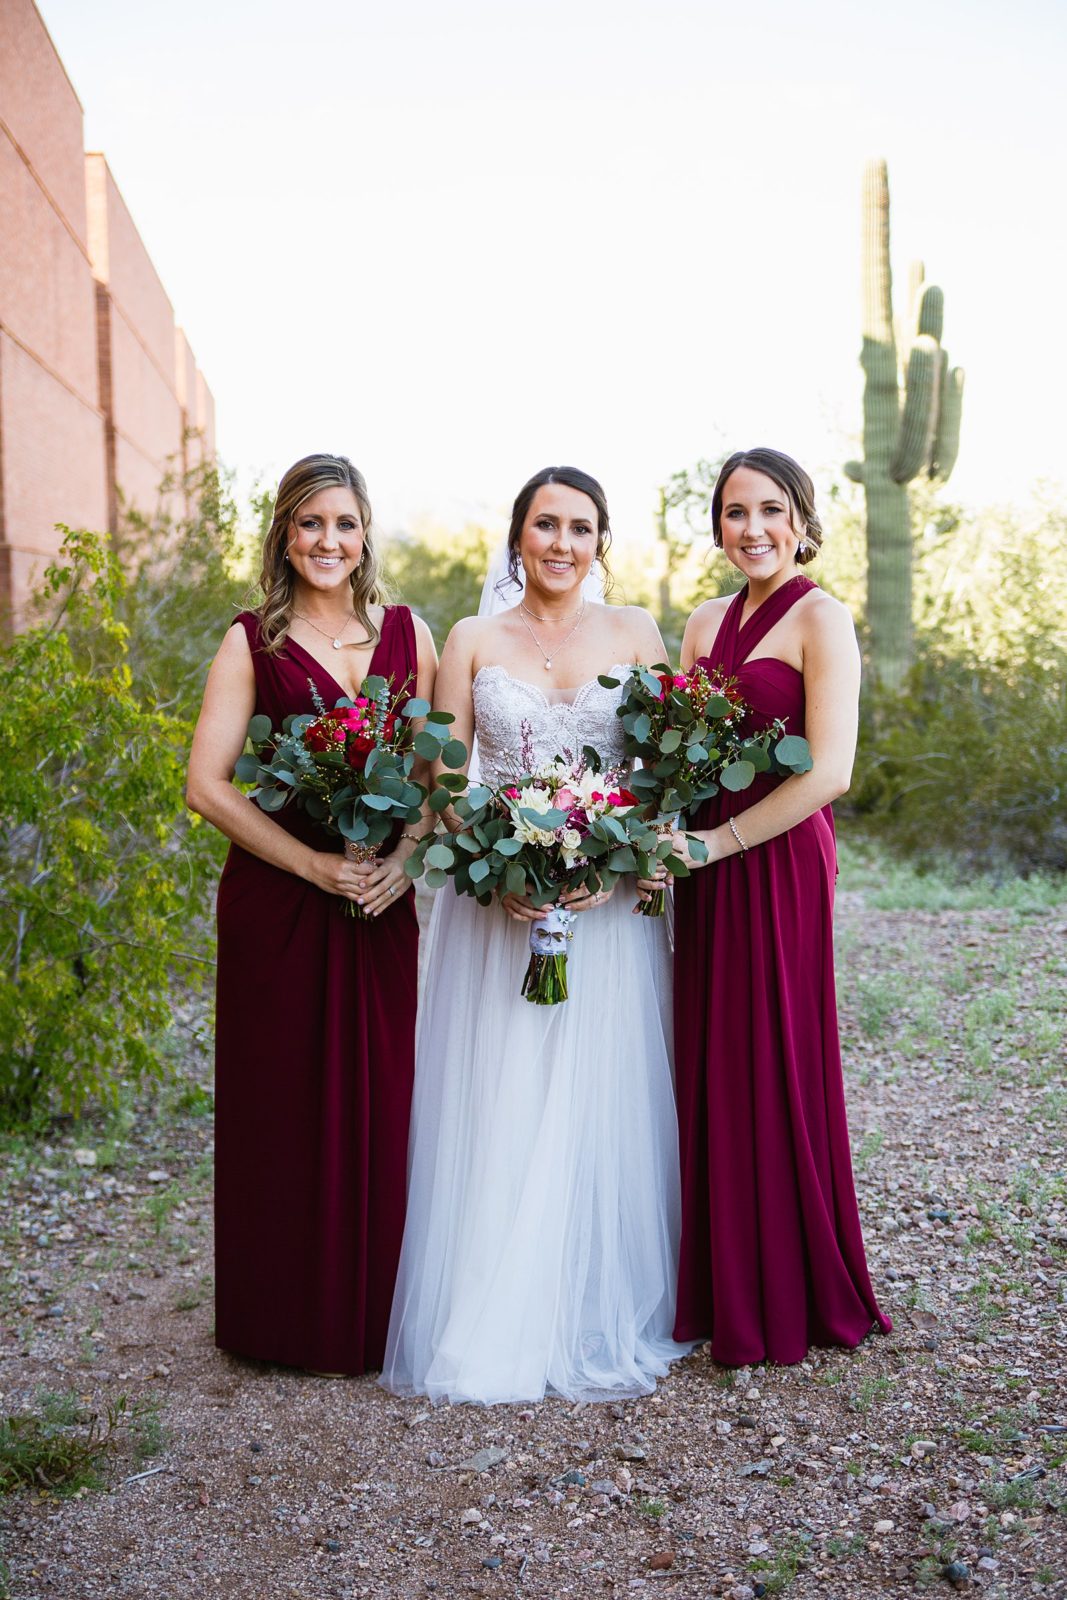 Bride and bridesmaids together at a Arizona Heritage Center at Papago Park wedding by Arizona wedding photographer PMA Photography.